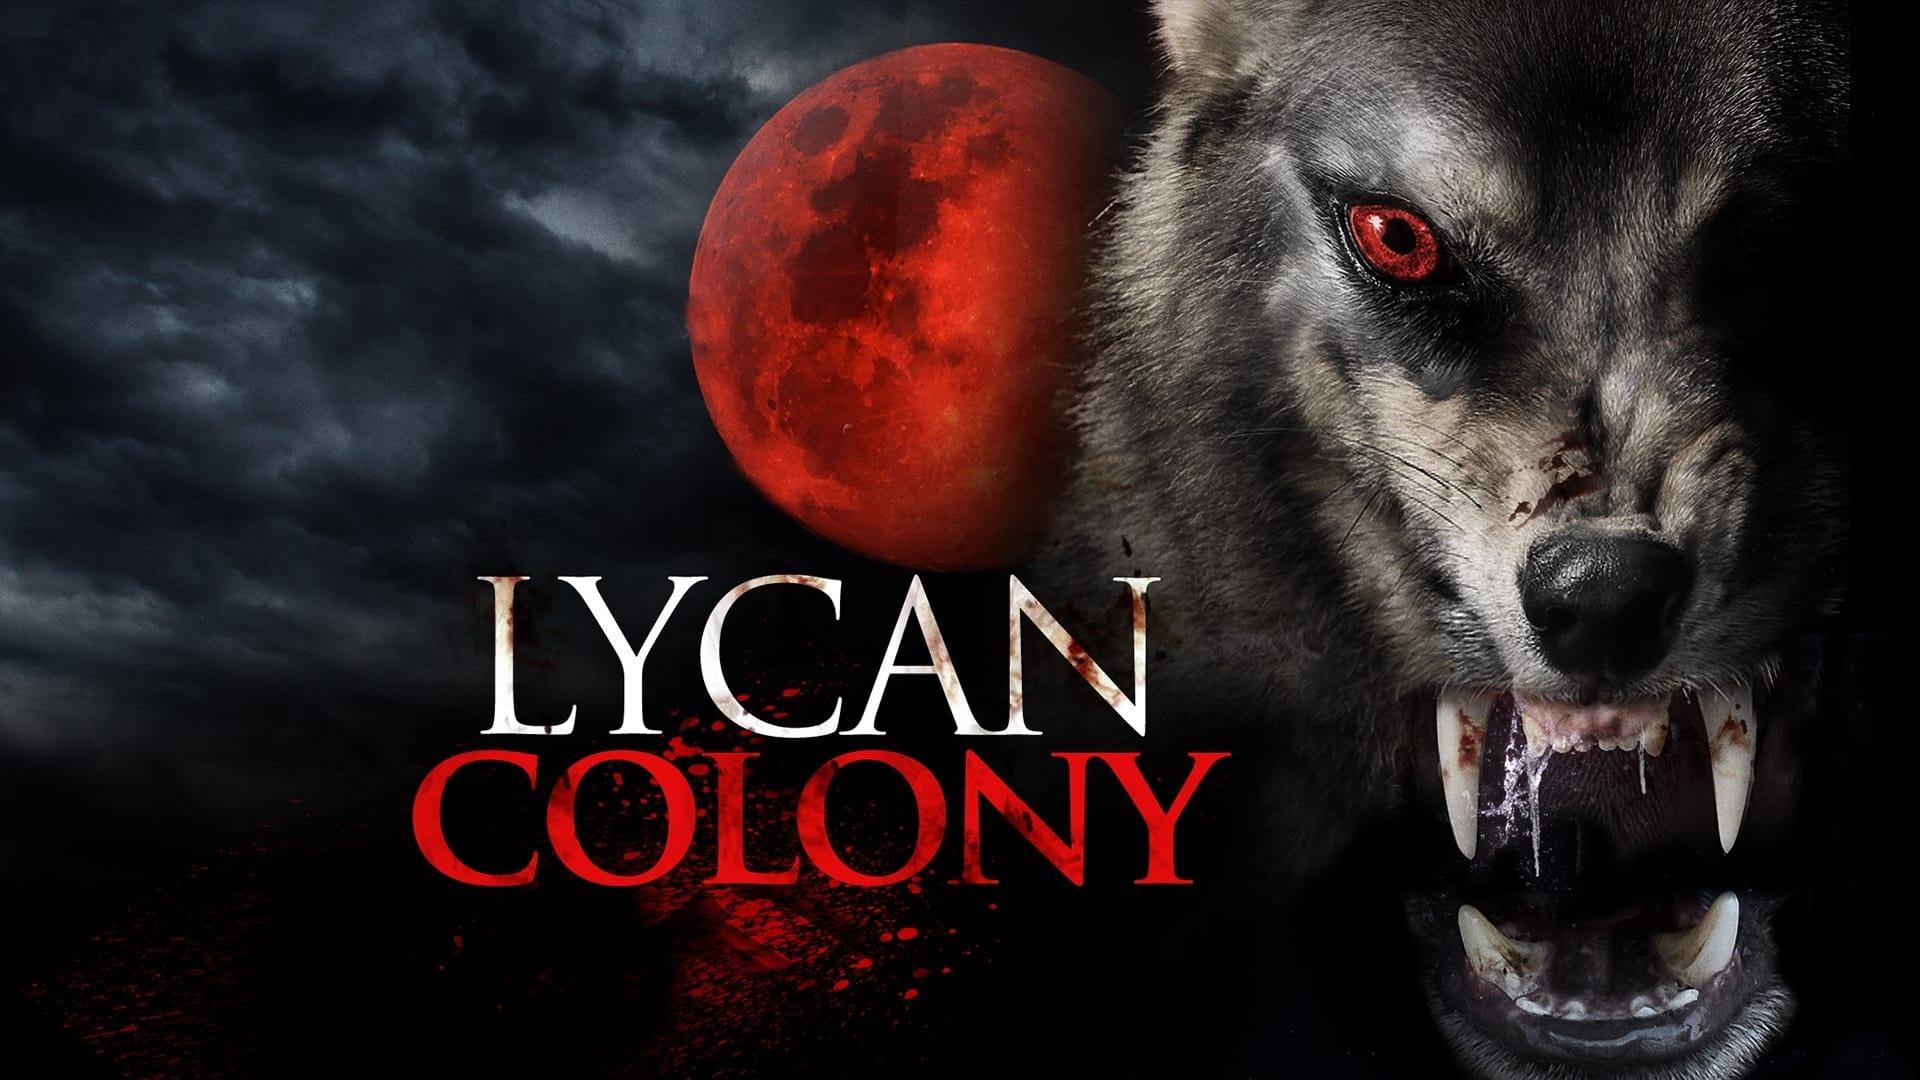 Lycan Colony backdrop